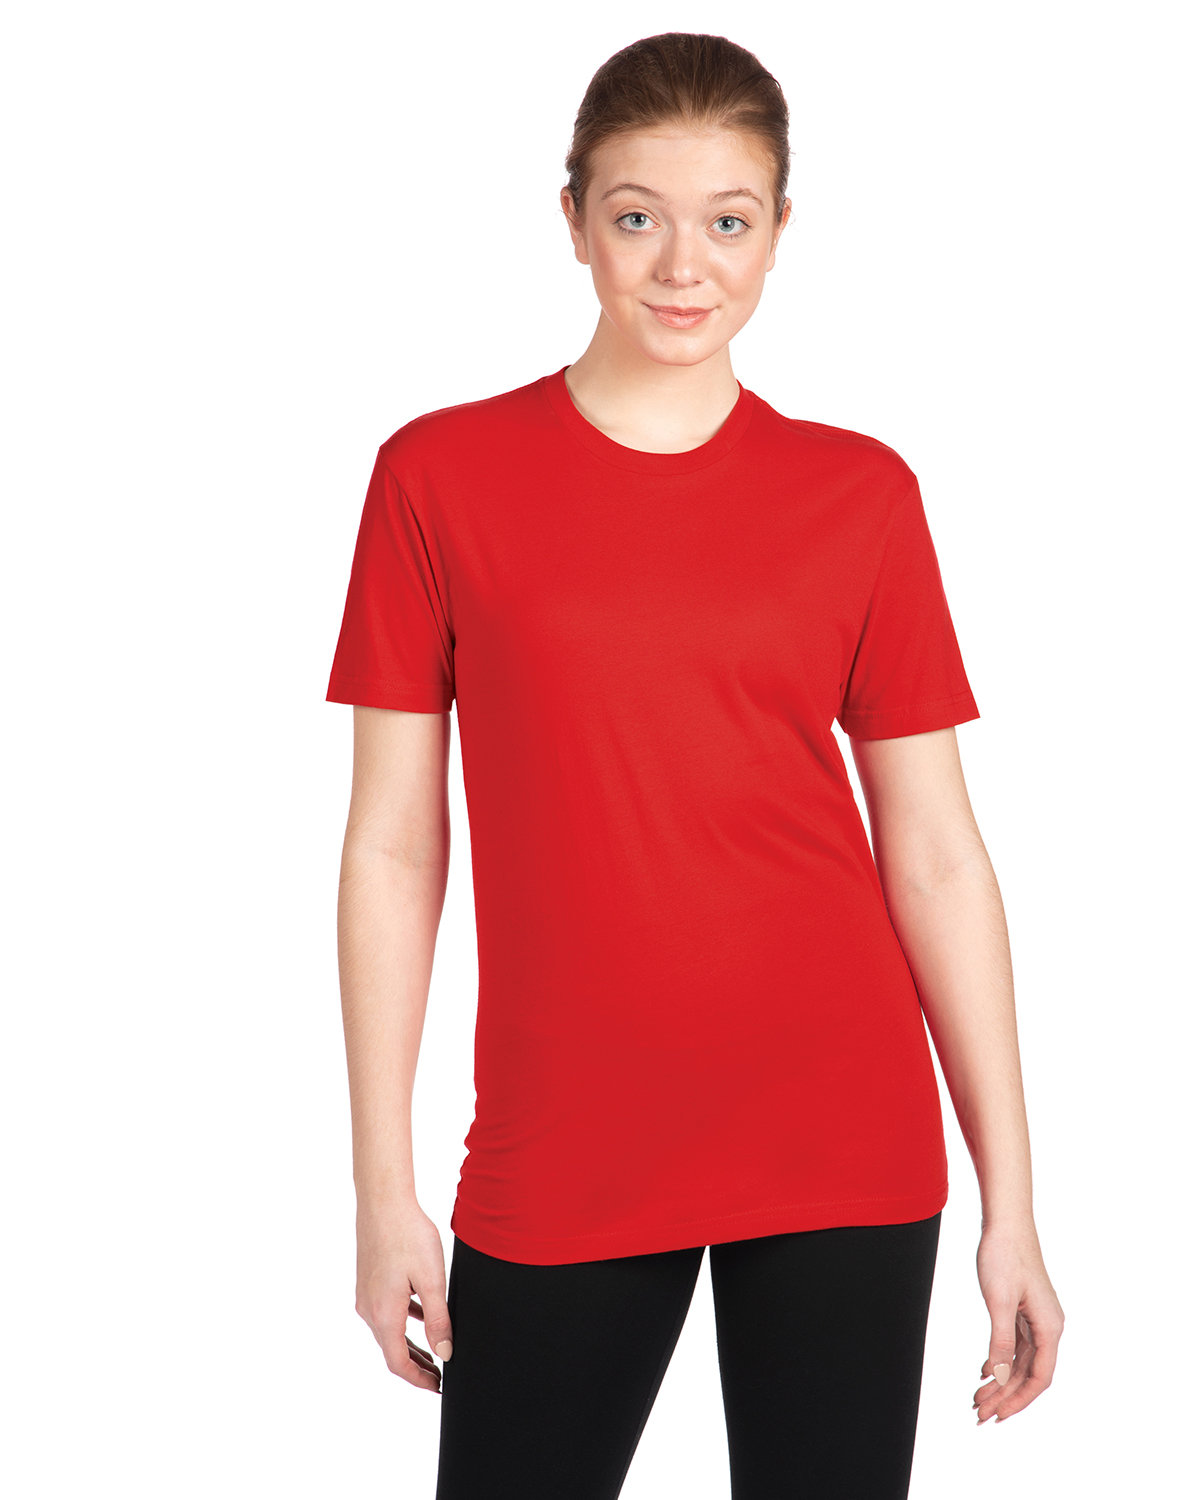 Next Level Unisex Cotton T-Shirt RED 